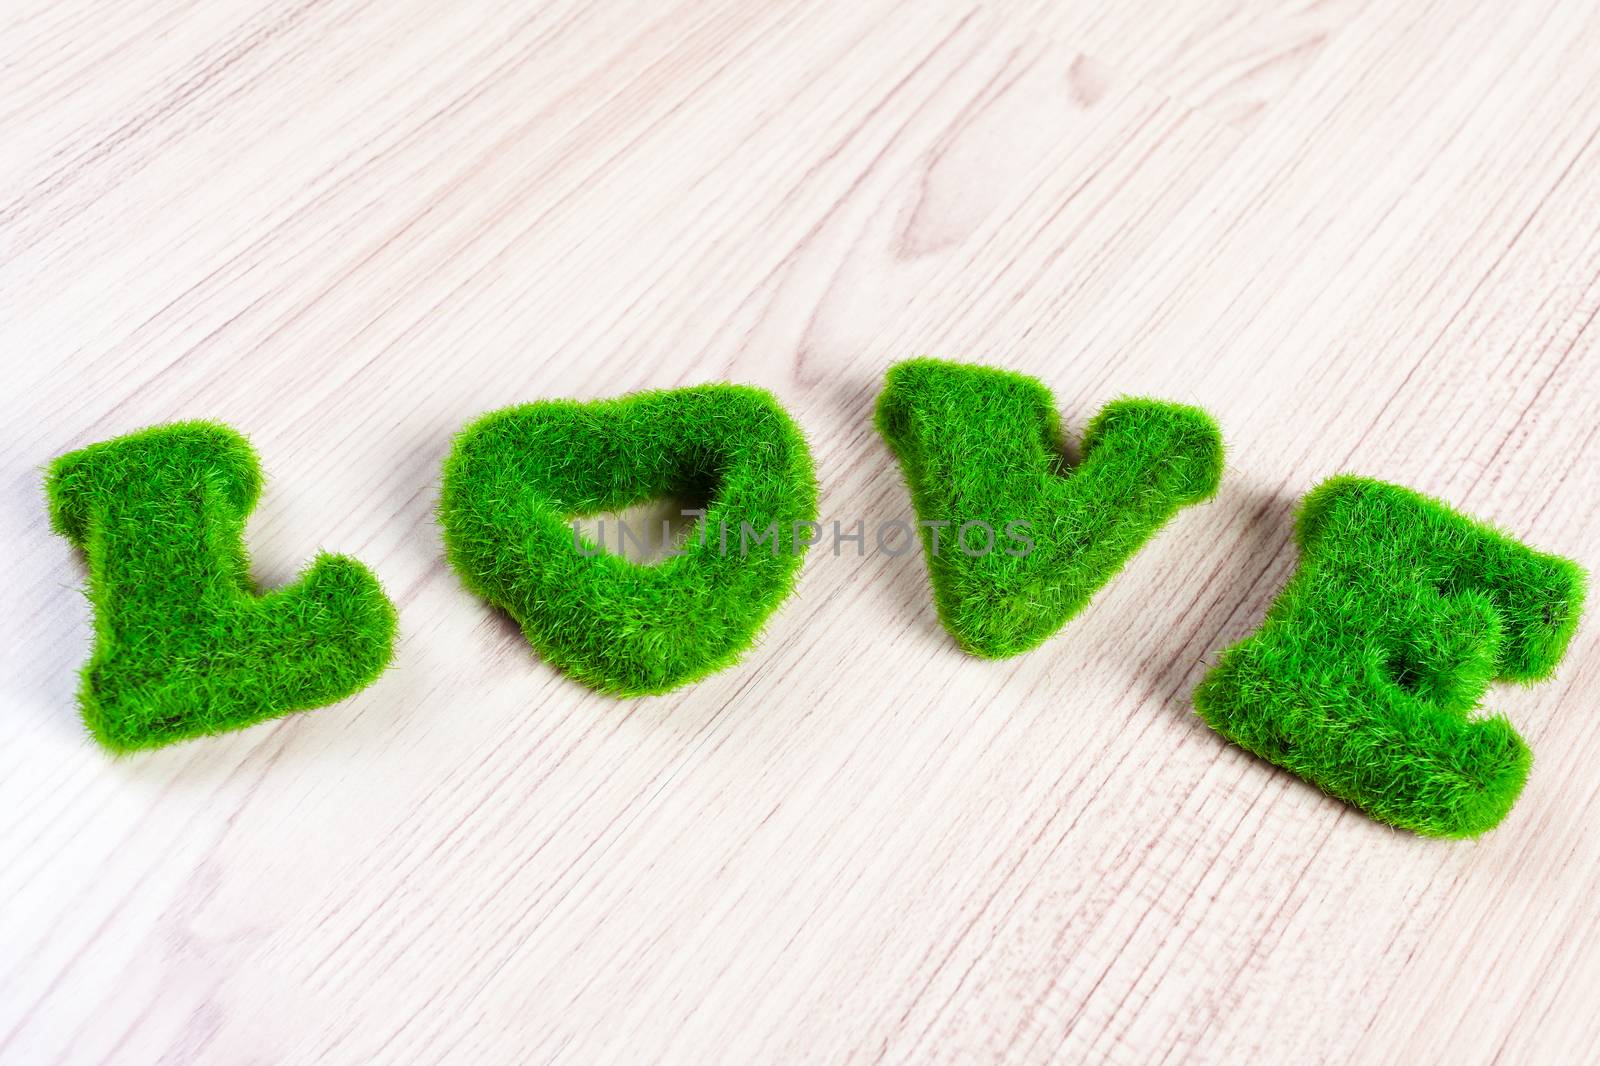 green love wording on wooden floor, made from artificial grass by FrameAngel